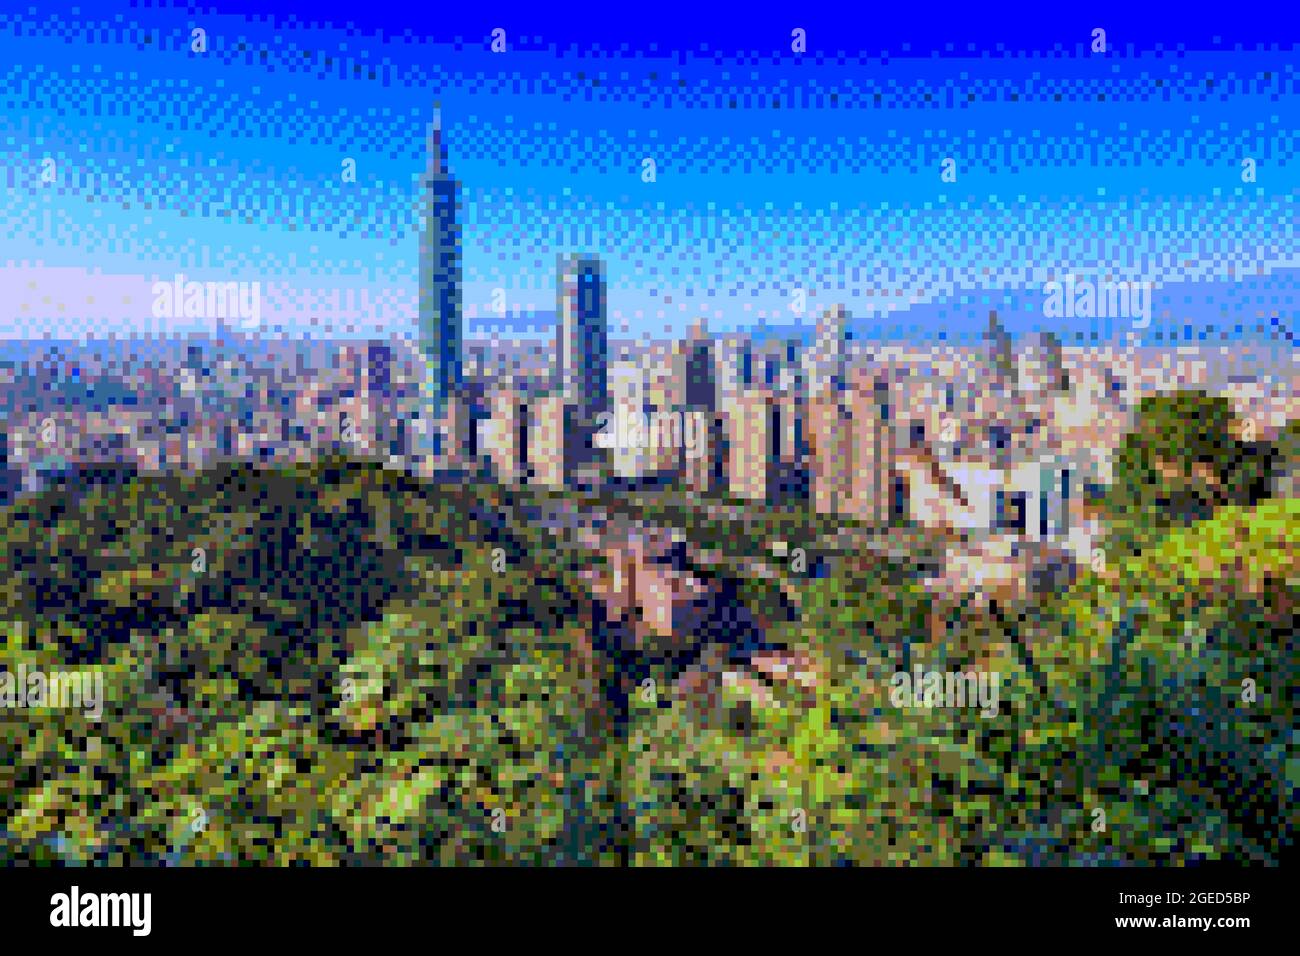 Pixel art 8-bit style graphics. Taipei city skyline, Taiwan. Stock Photo